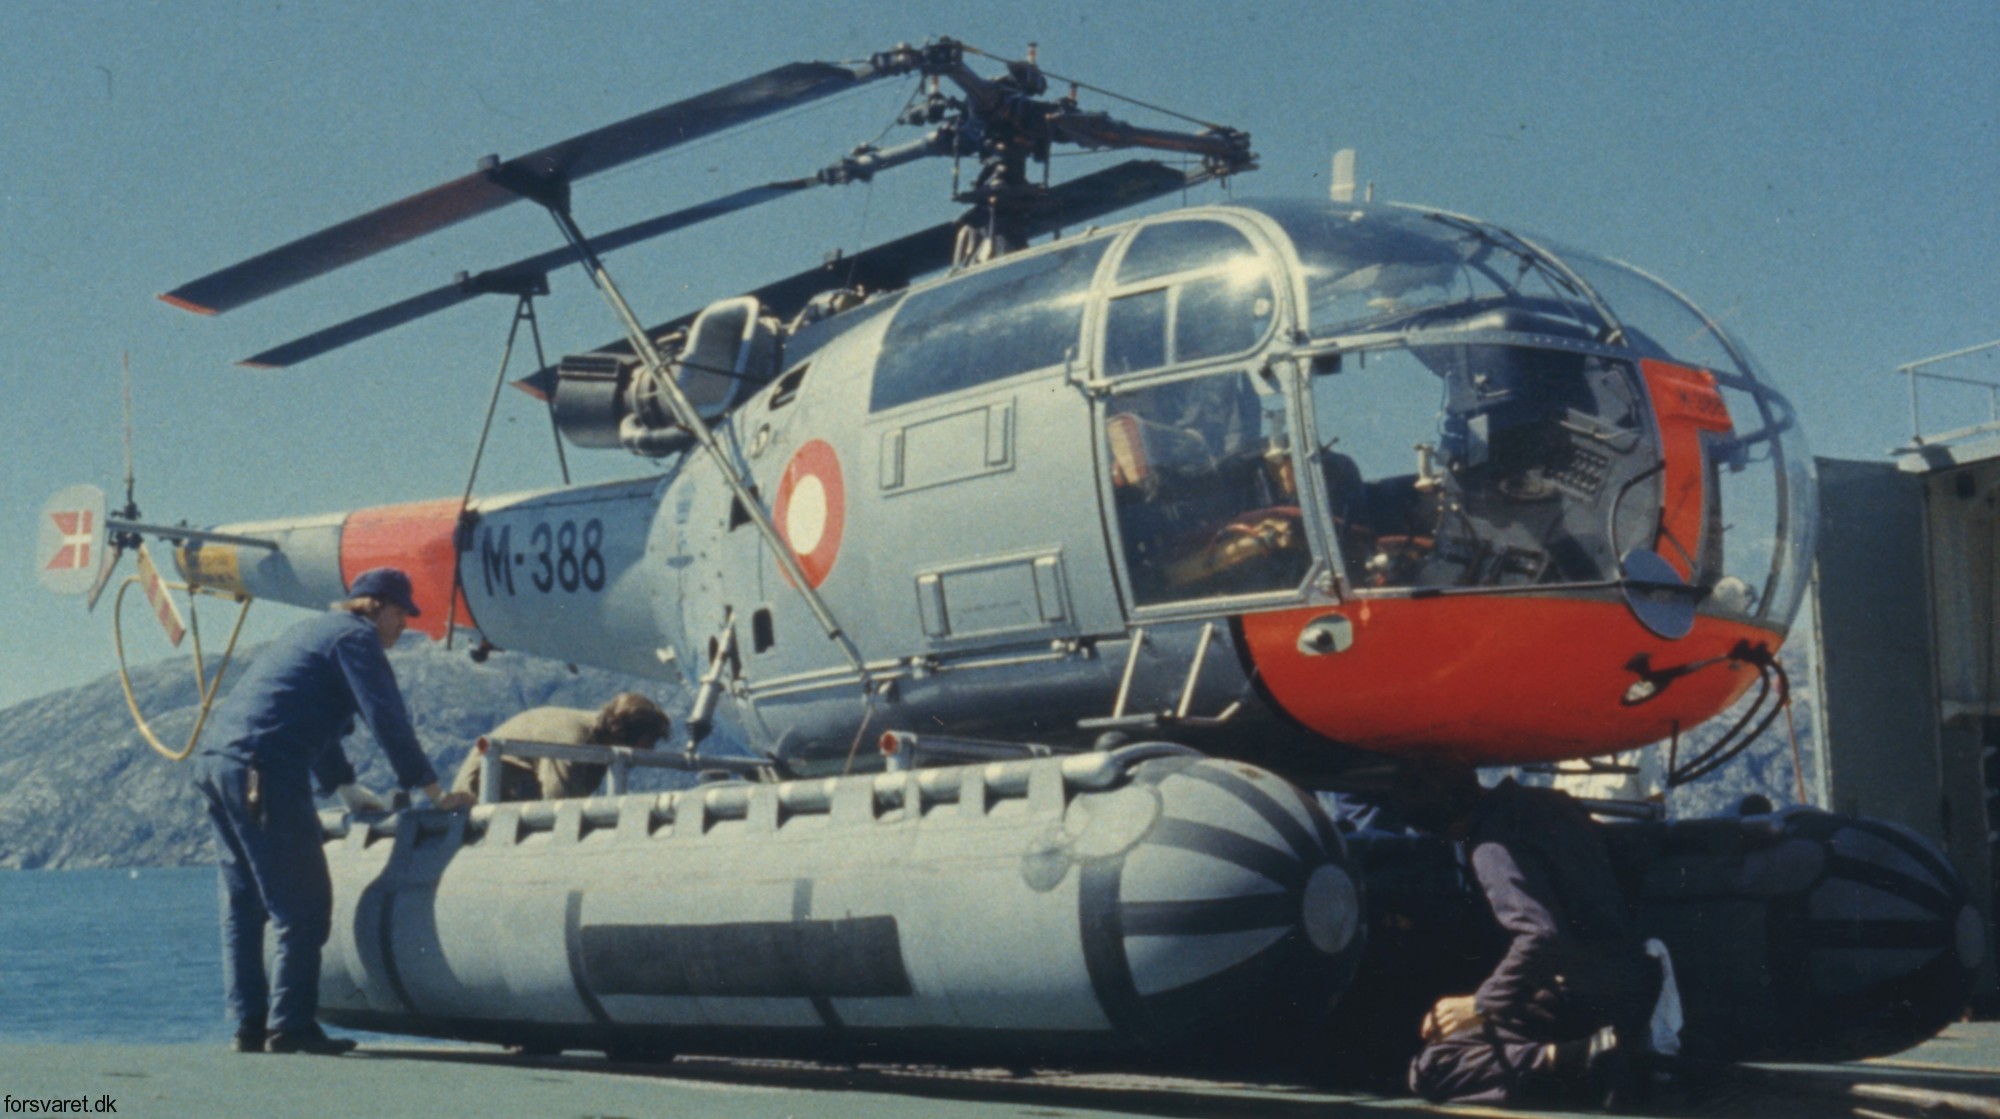 sa 316b alouette iii helicopter royal danish navy søværnet kongelige danske marine sud aviation m-388 08